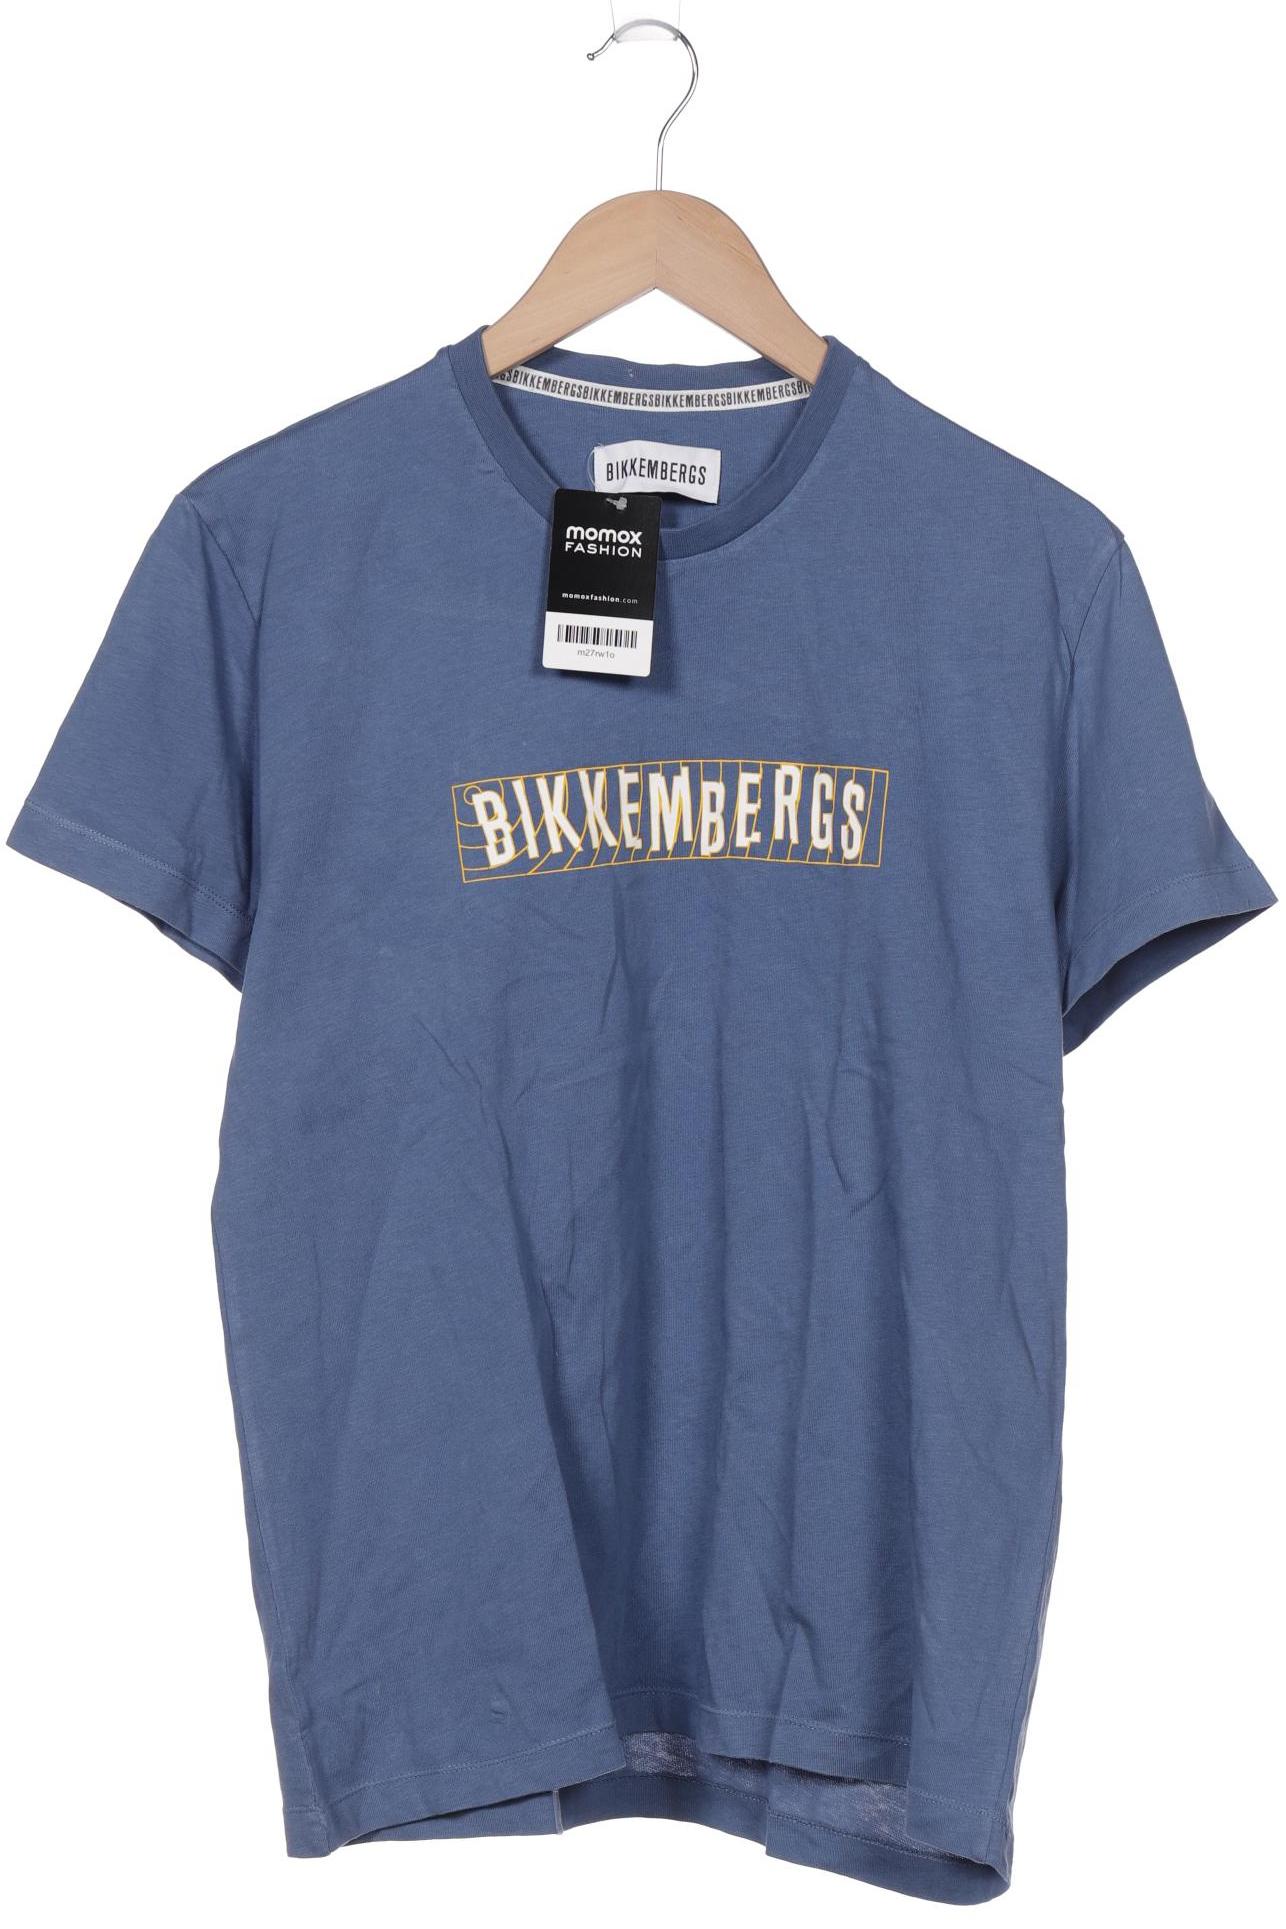 BIKKEMBERGS Herren T-Shirt, blau von Bikkembergs